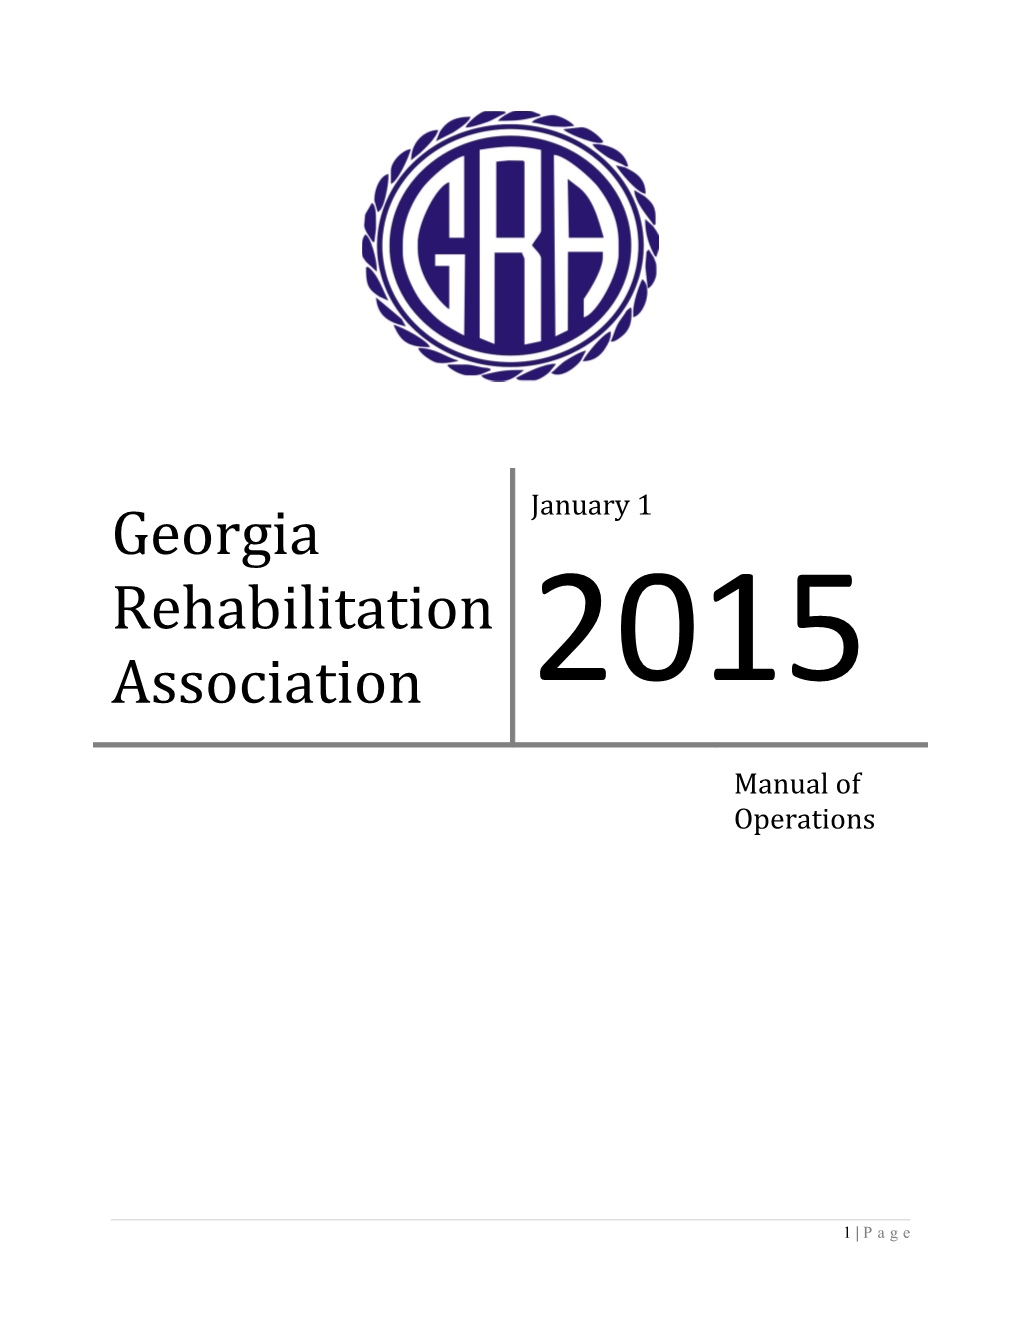 Georgia Rehabilitation Association